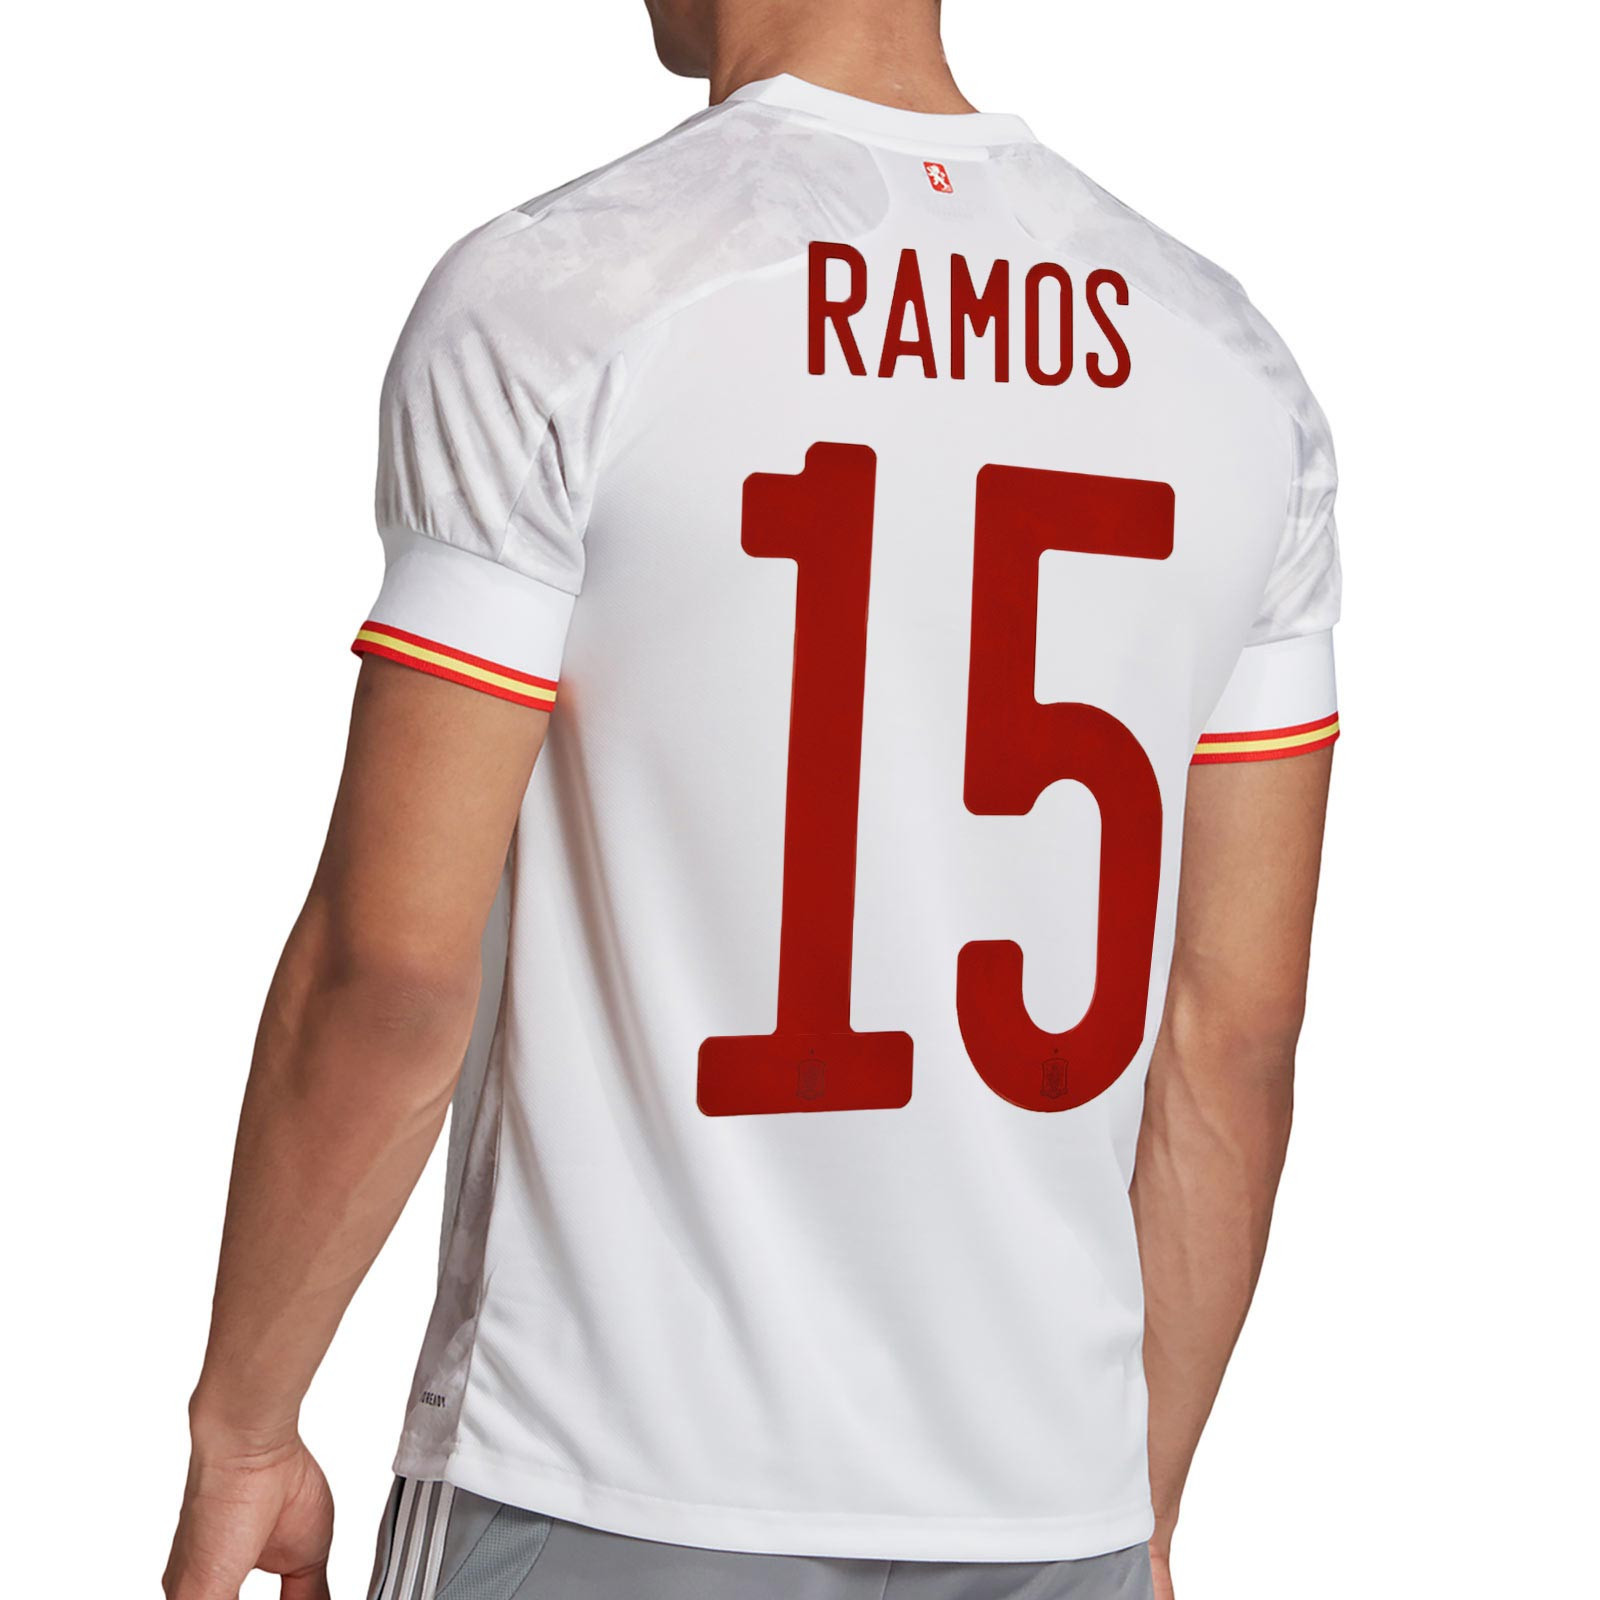 perspectiva Borradura directorio Camiseta adidas Ramos 2a España 20 21 | futbolmania